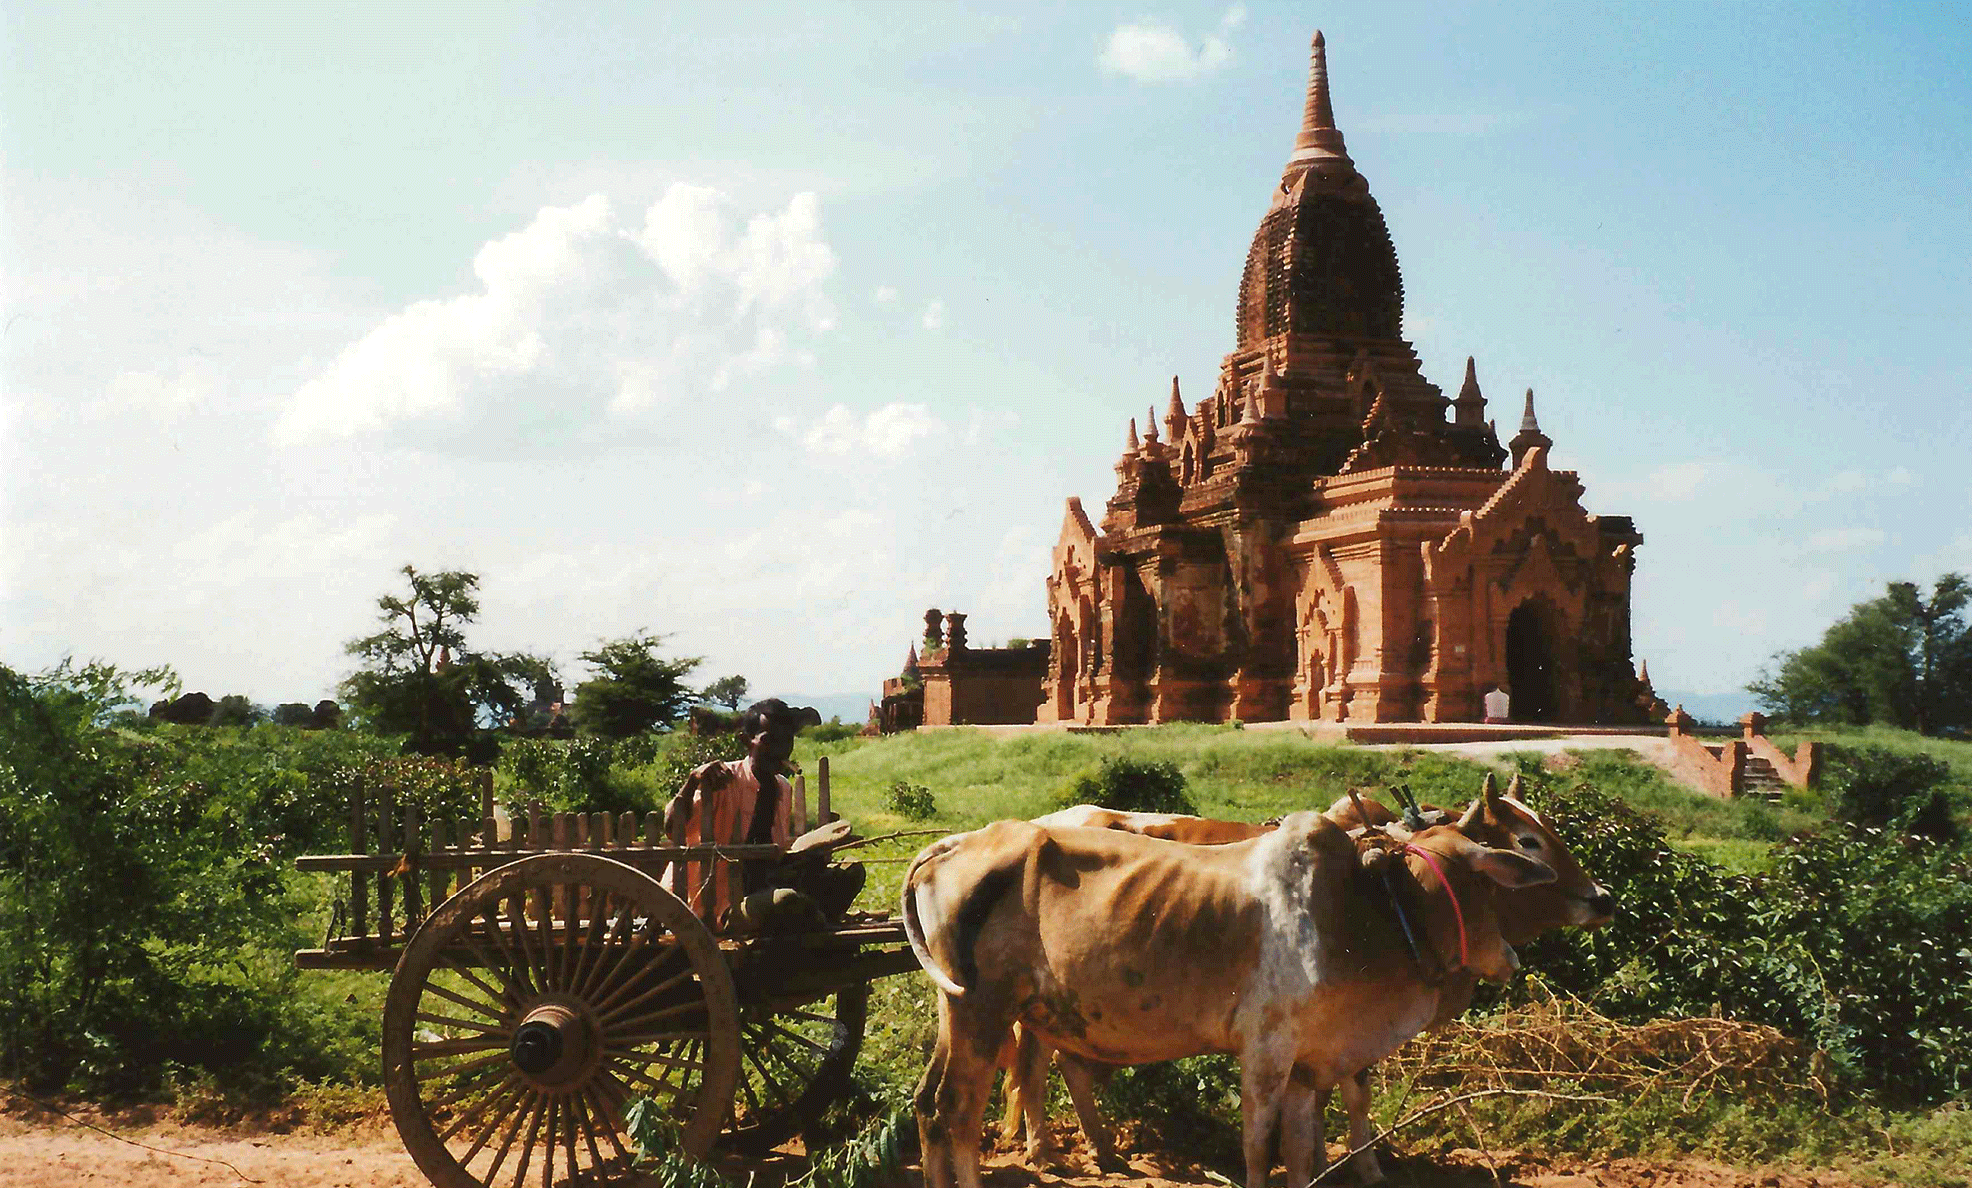 AK-Taylor-Safari-Myanmar-Temple-Cart.gif